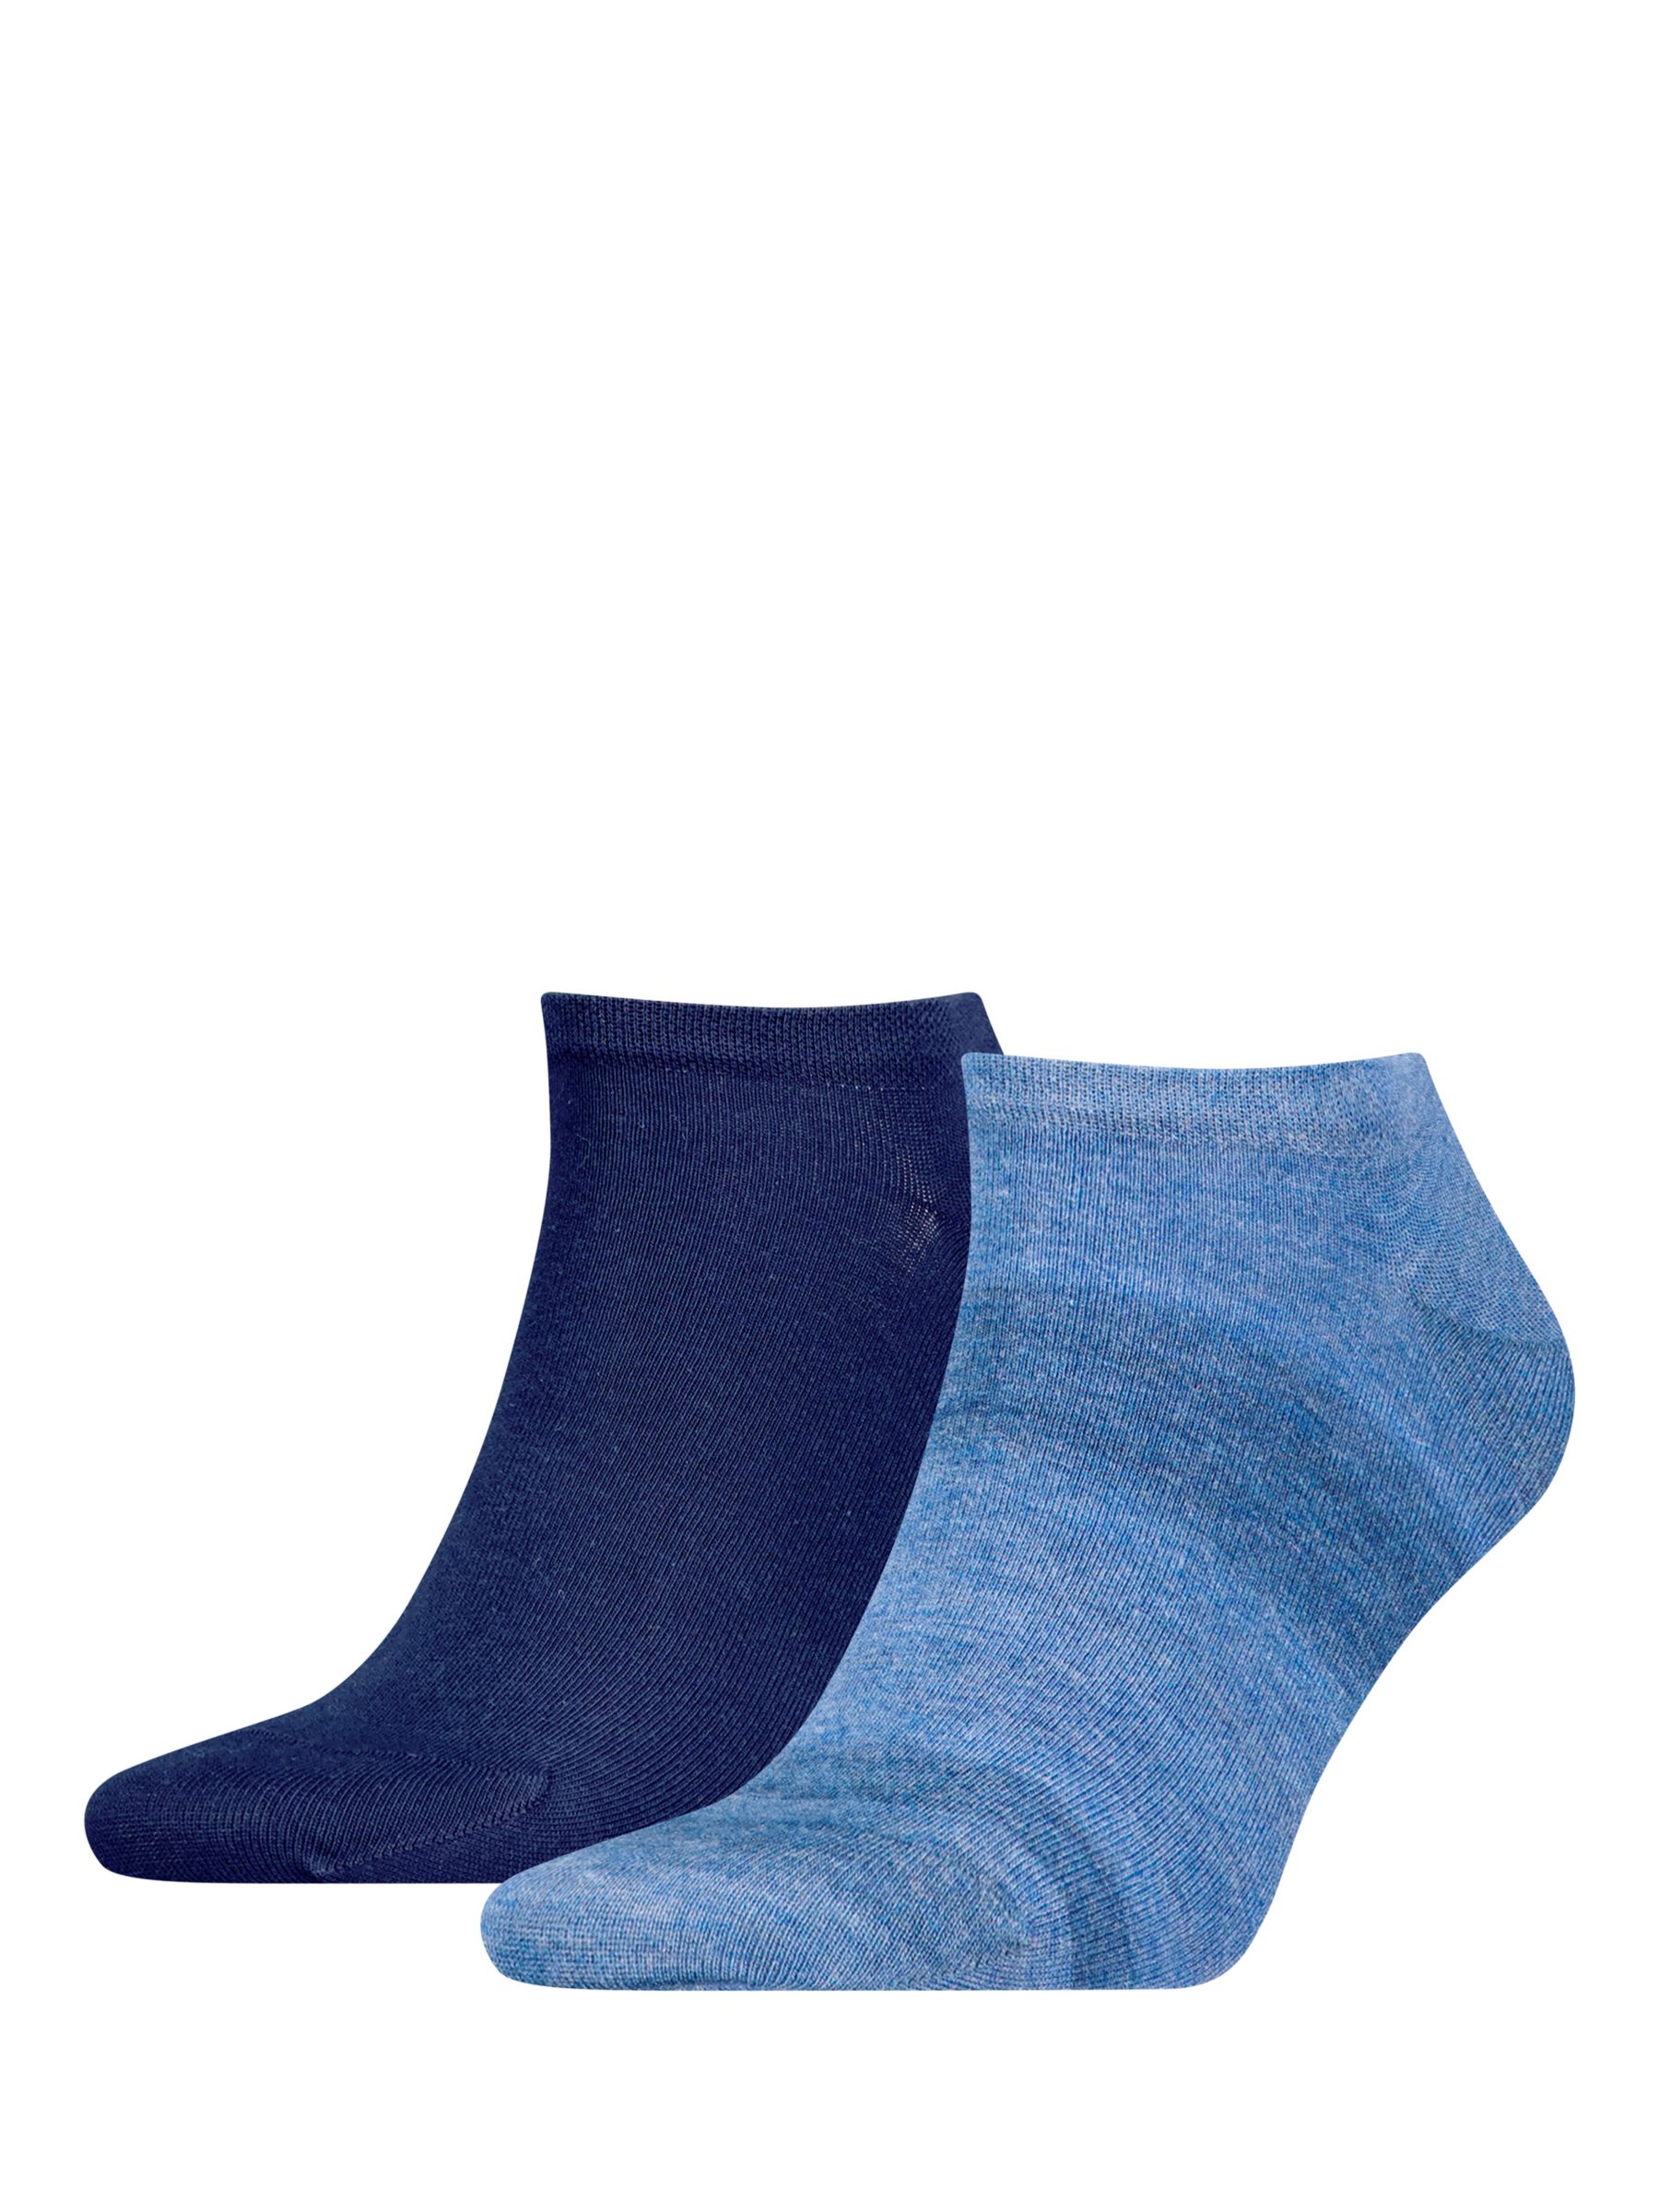 Buy Calvin Klein Trainer Socks, Pack of 2, Blue Online at johnlewis.com